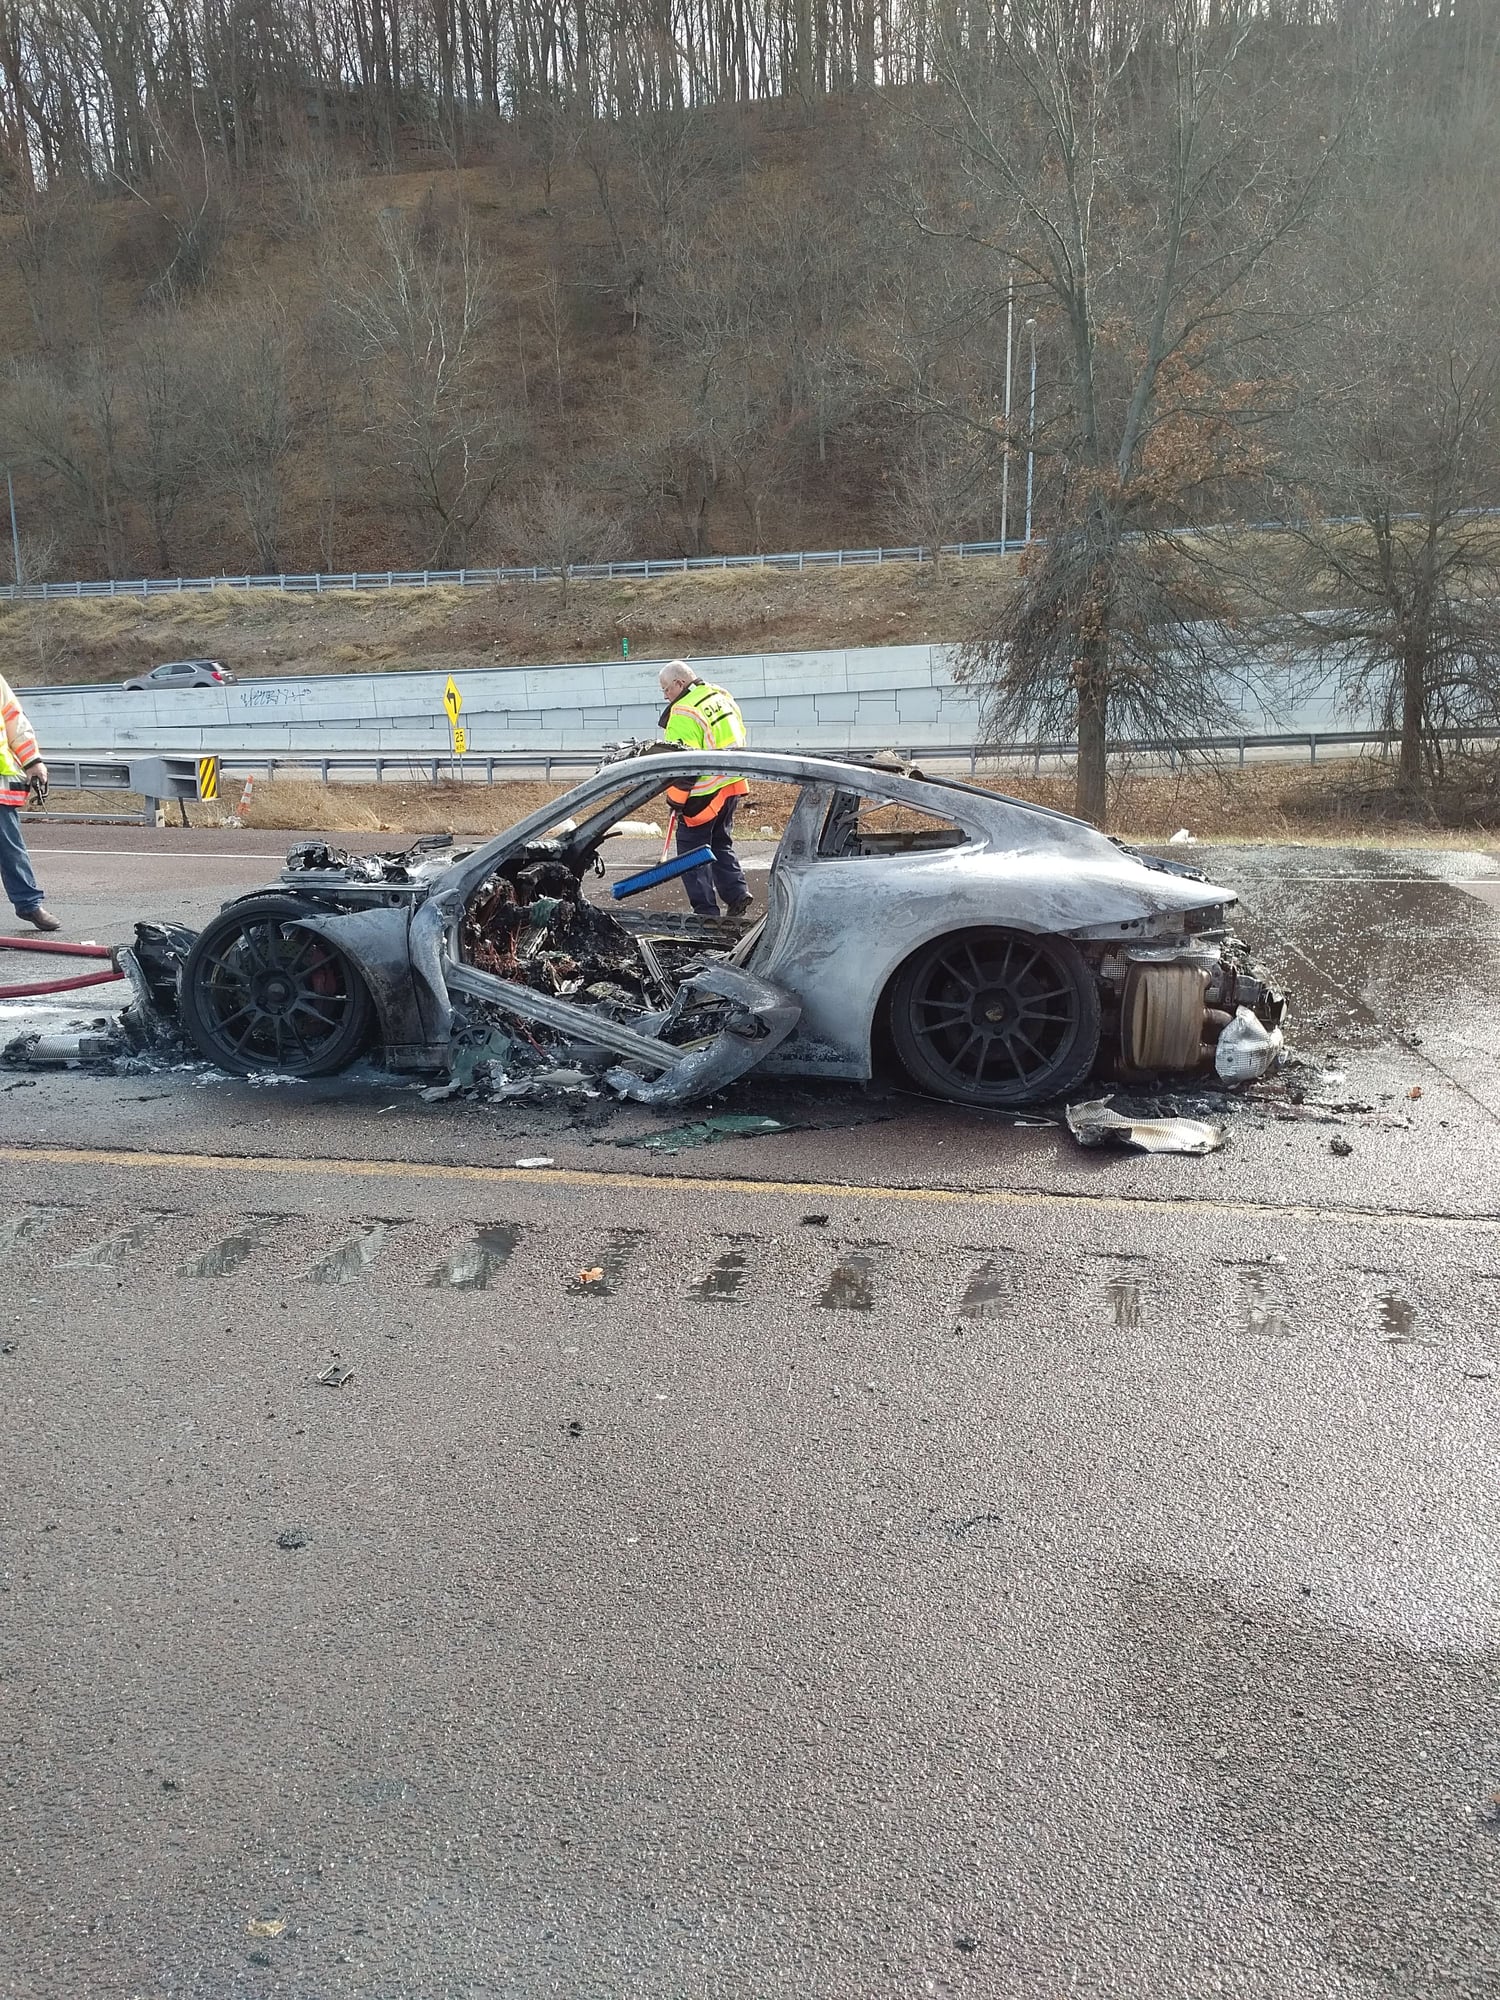 991 Engine Fire On Highway - Car Destroyed - Page 5 - Rennlist ...